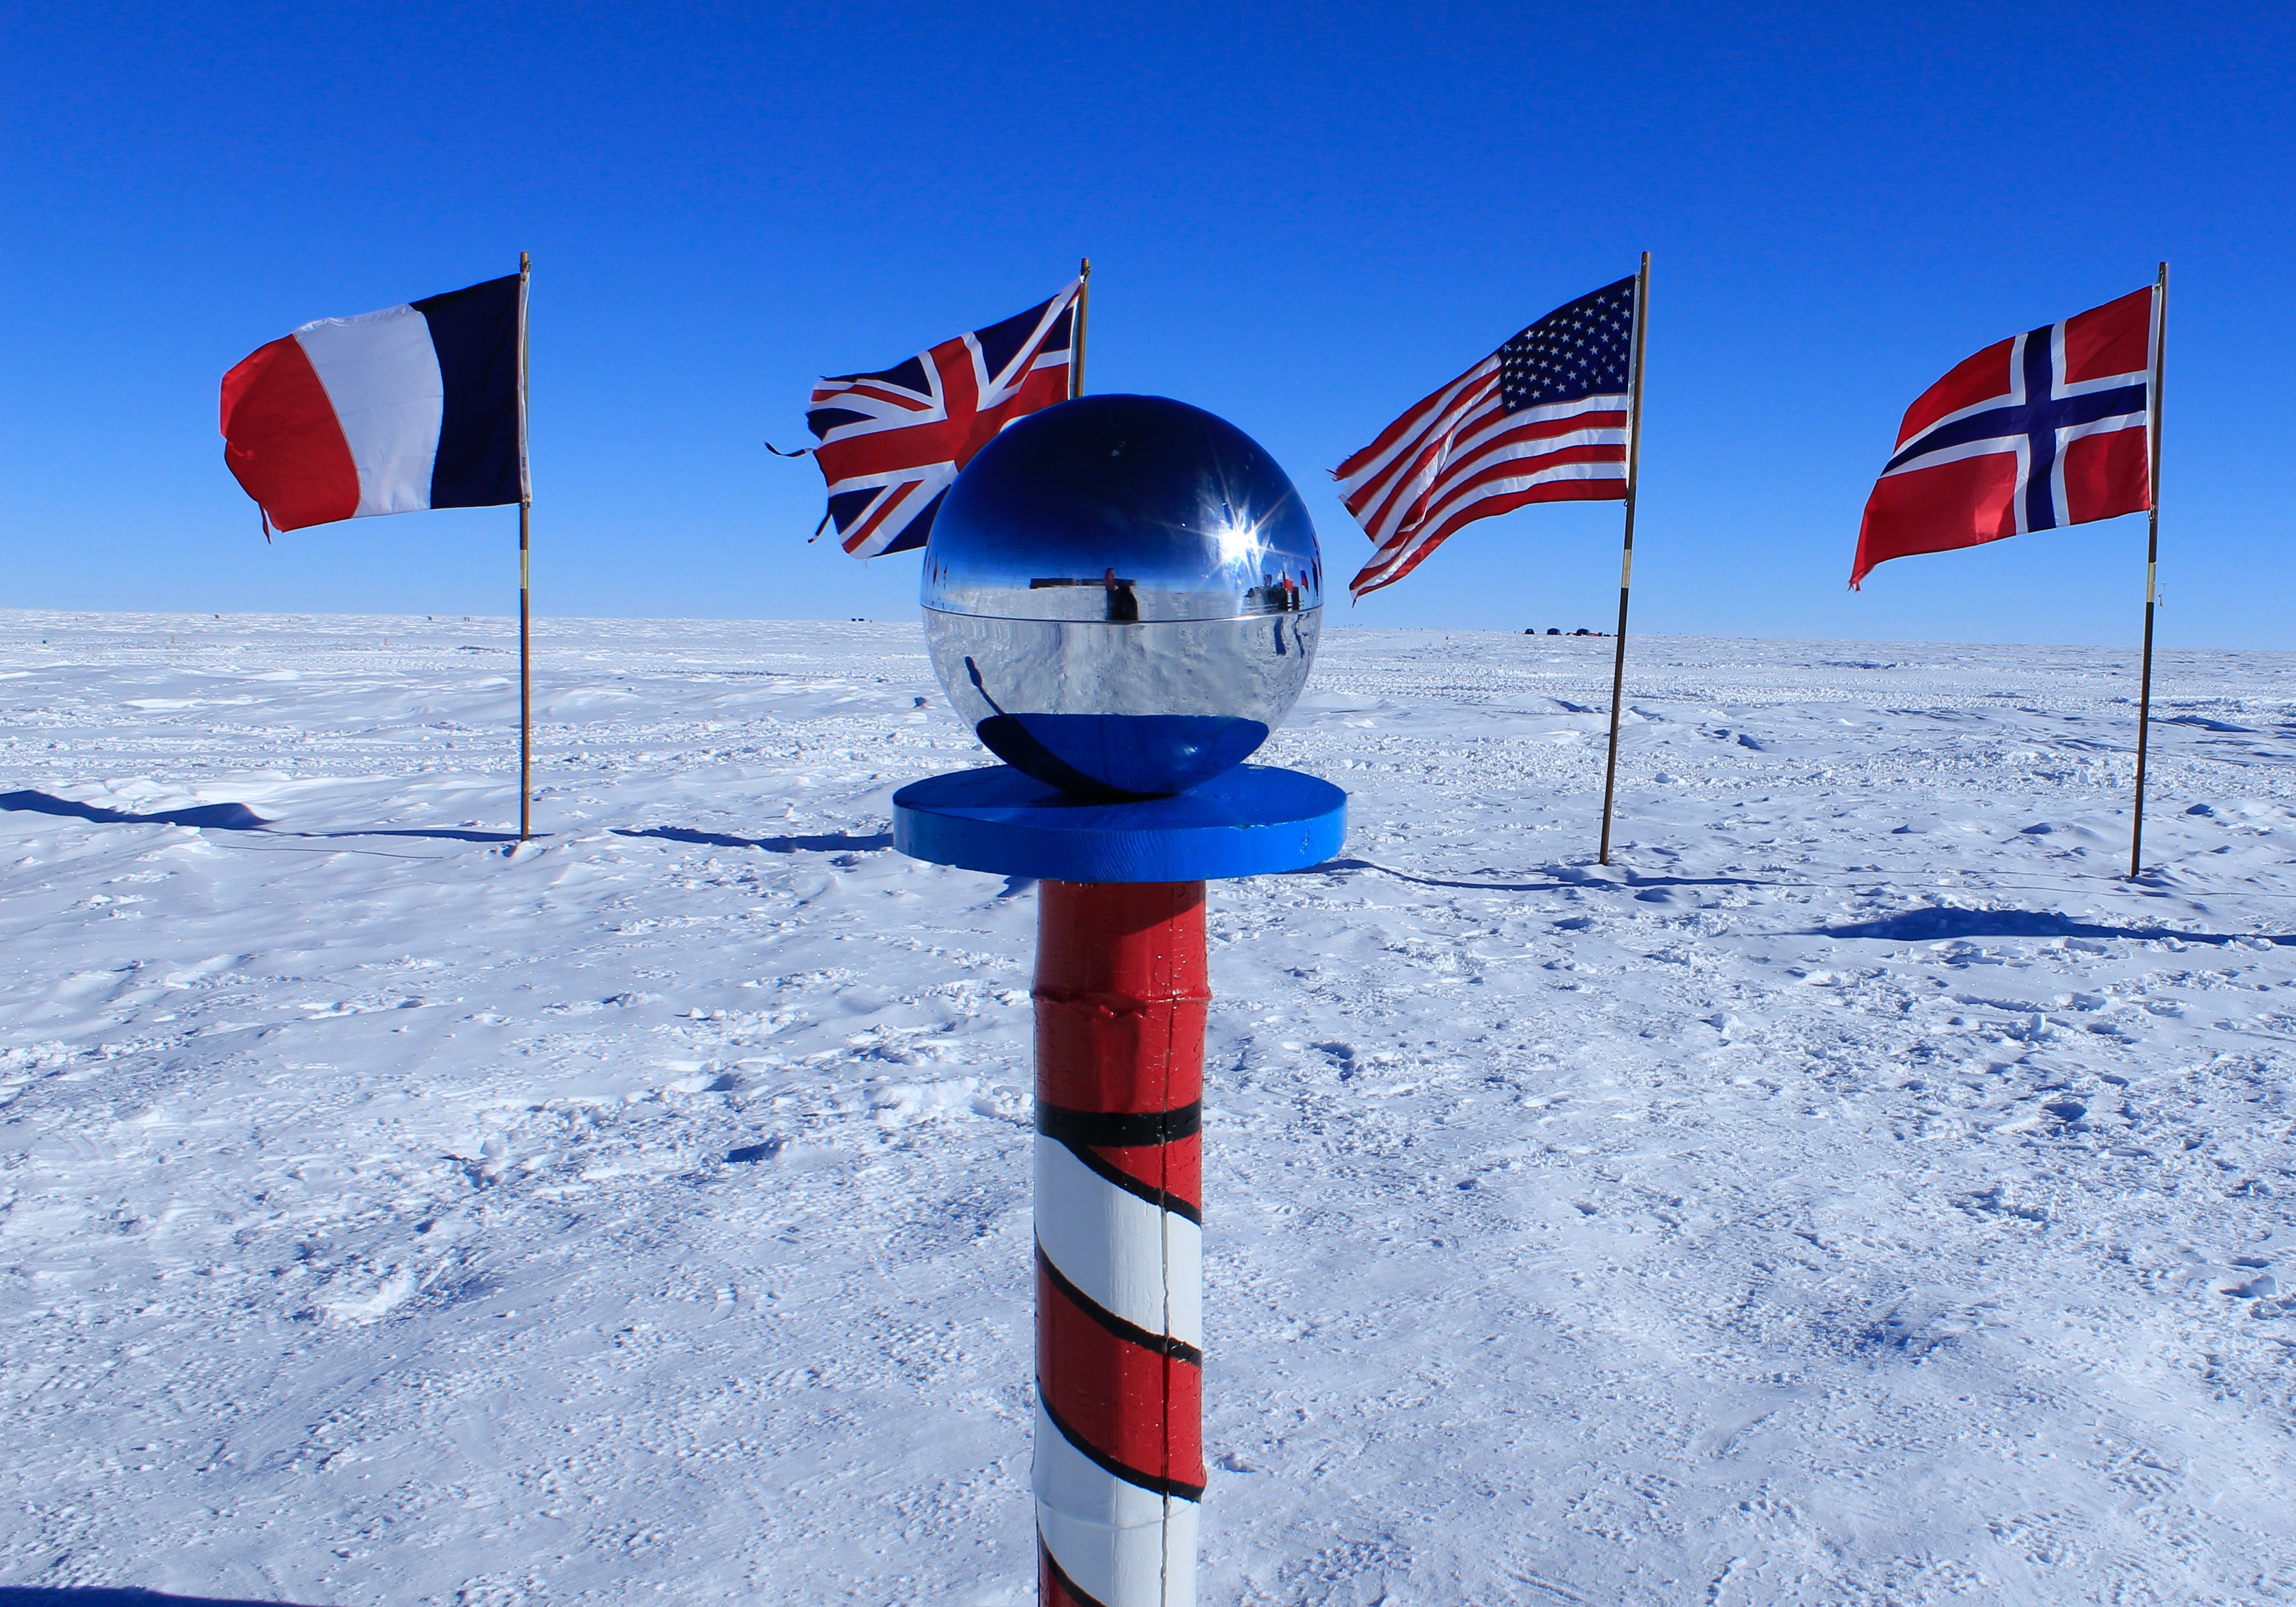 The South Pole, Antarctica